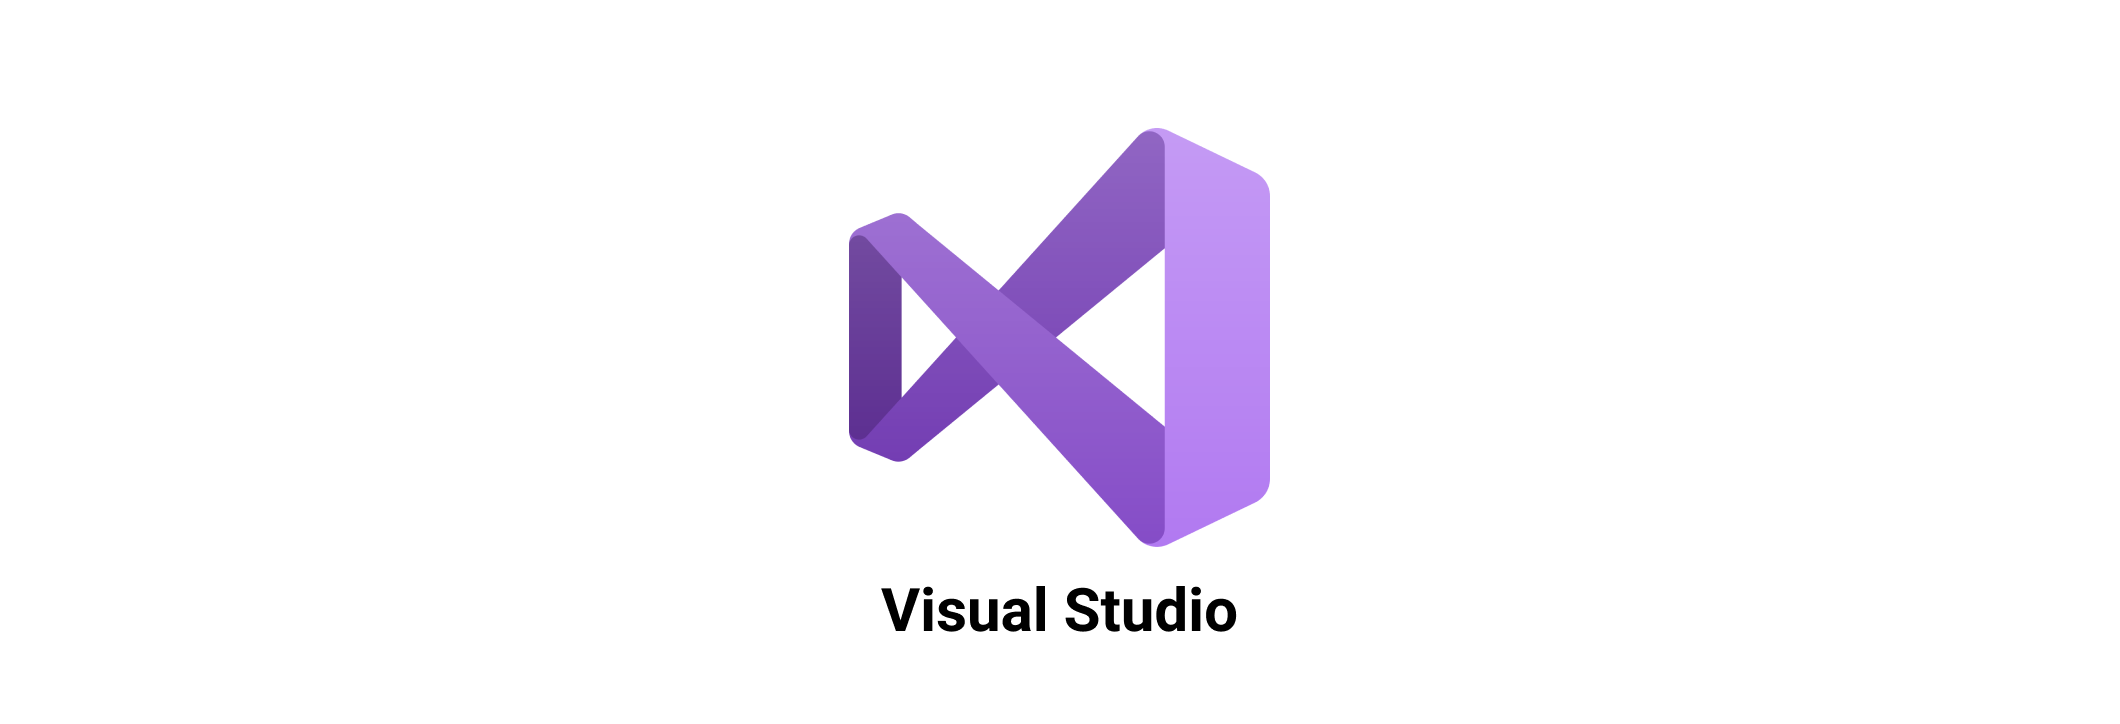 Best Android Development Tools Visual Studio